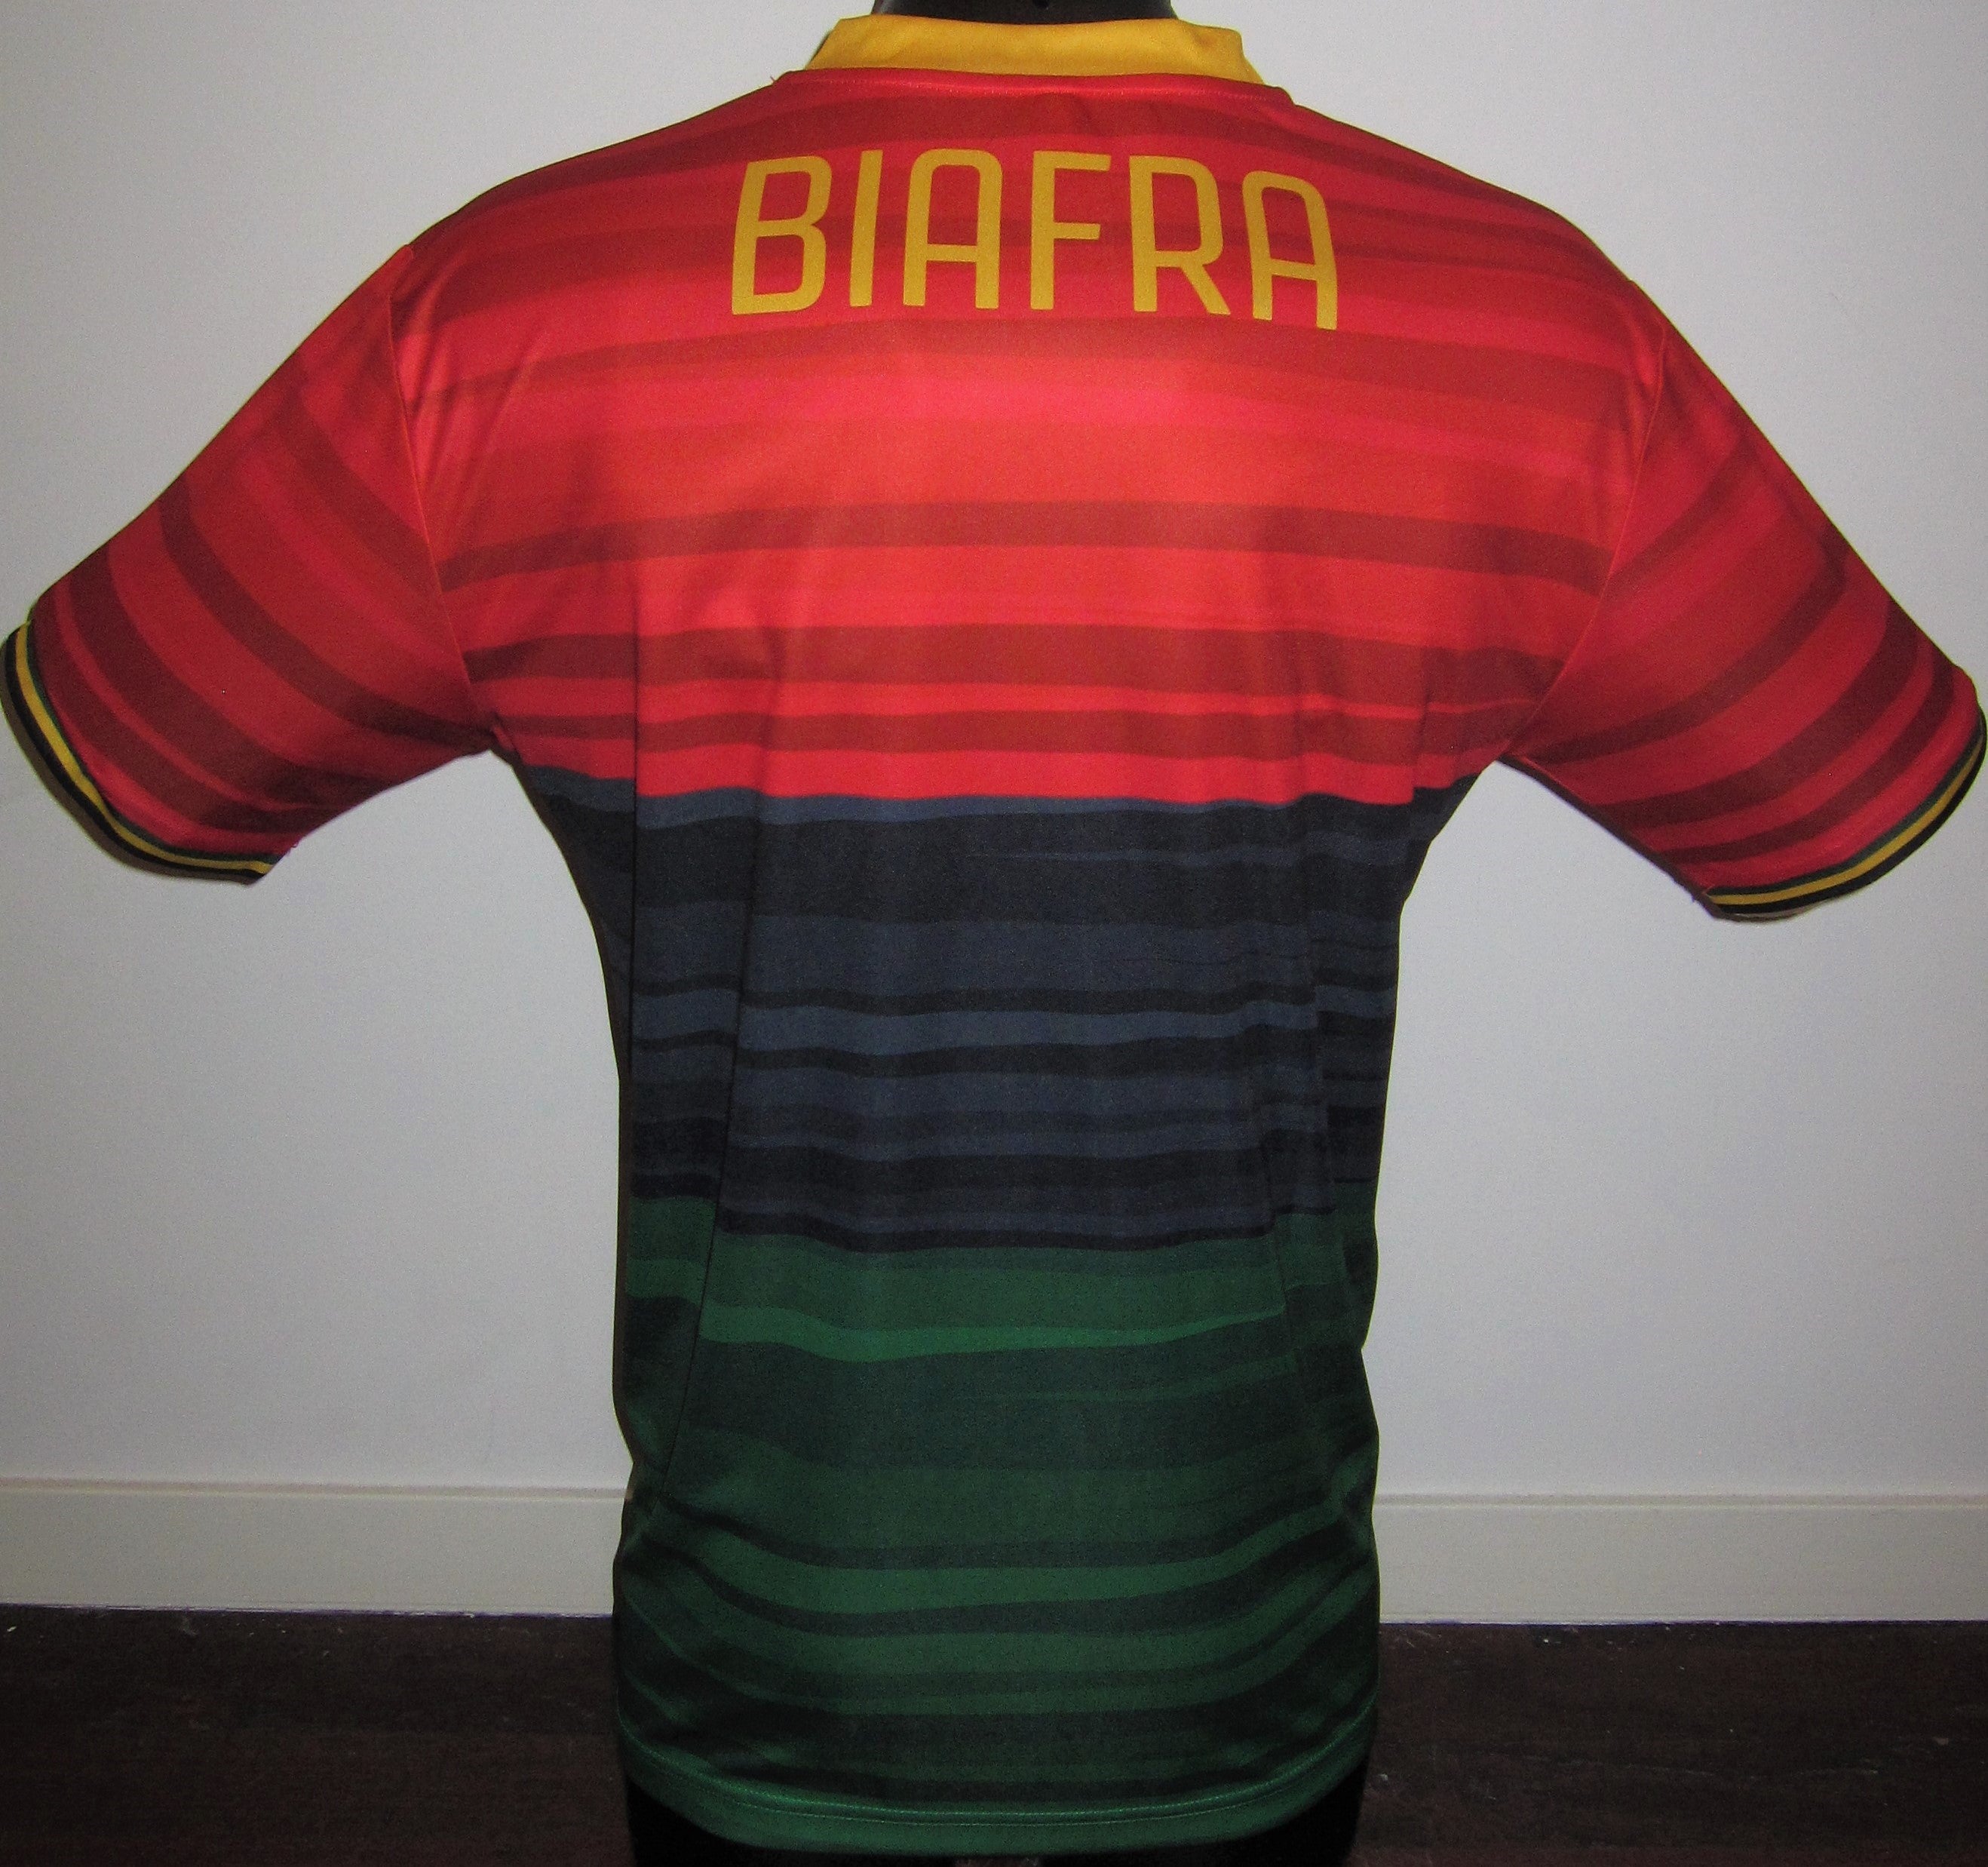 Biafra Prototype Jersey/Shirt